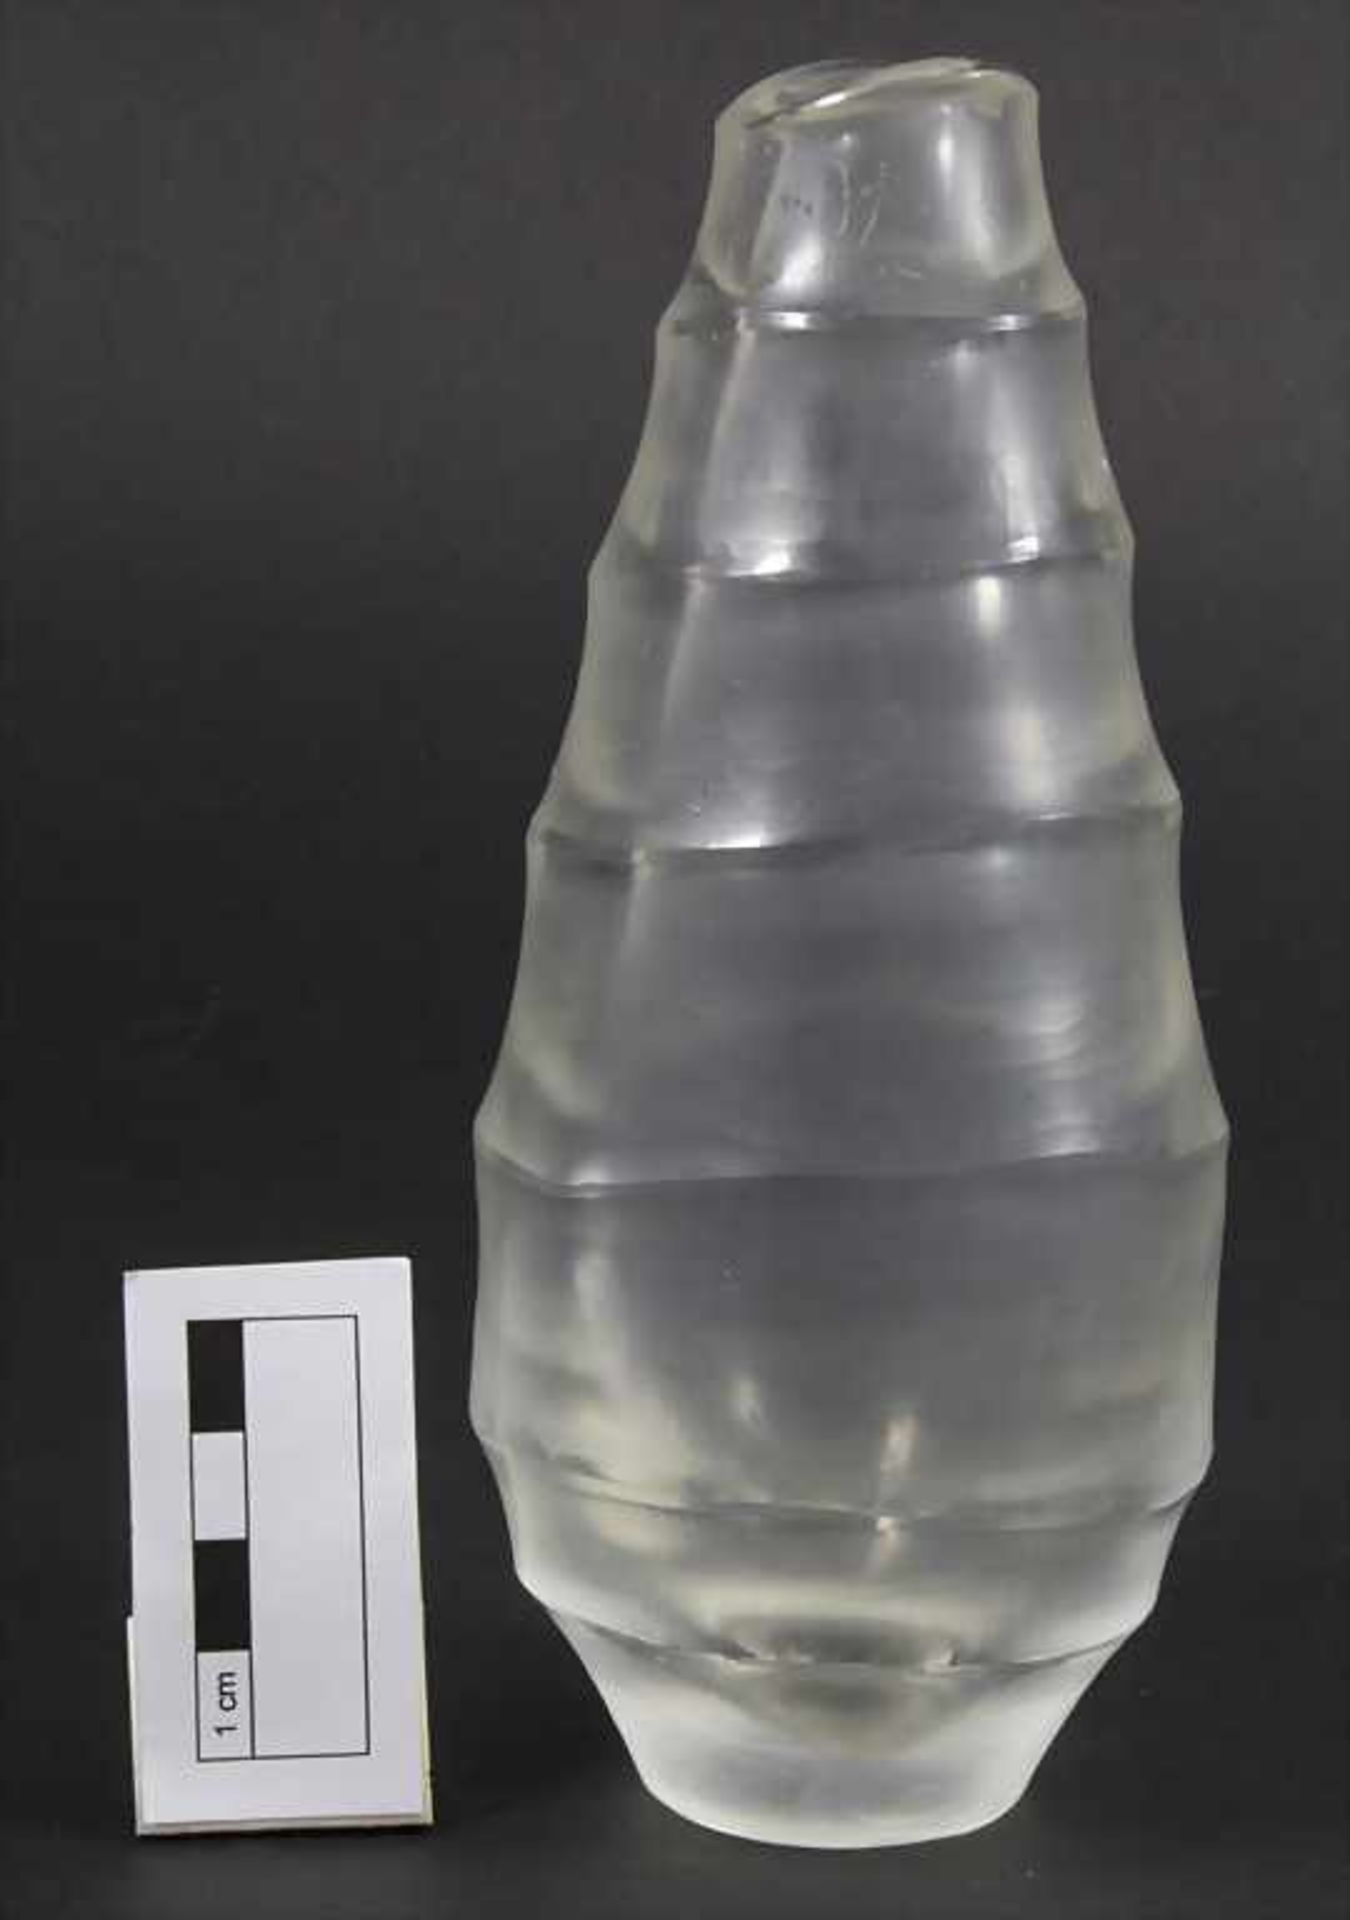 Glasziervase / A decorative vase, Fachschule Eiff Stuttgart, Entw. wohl H. Model, 50er Jahre - Image 2 of 4